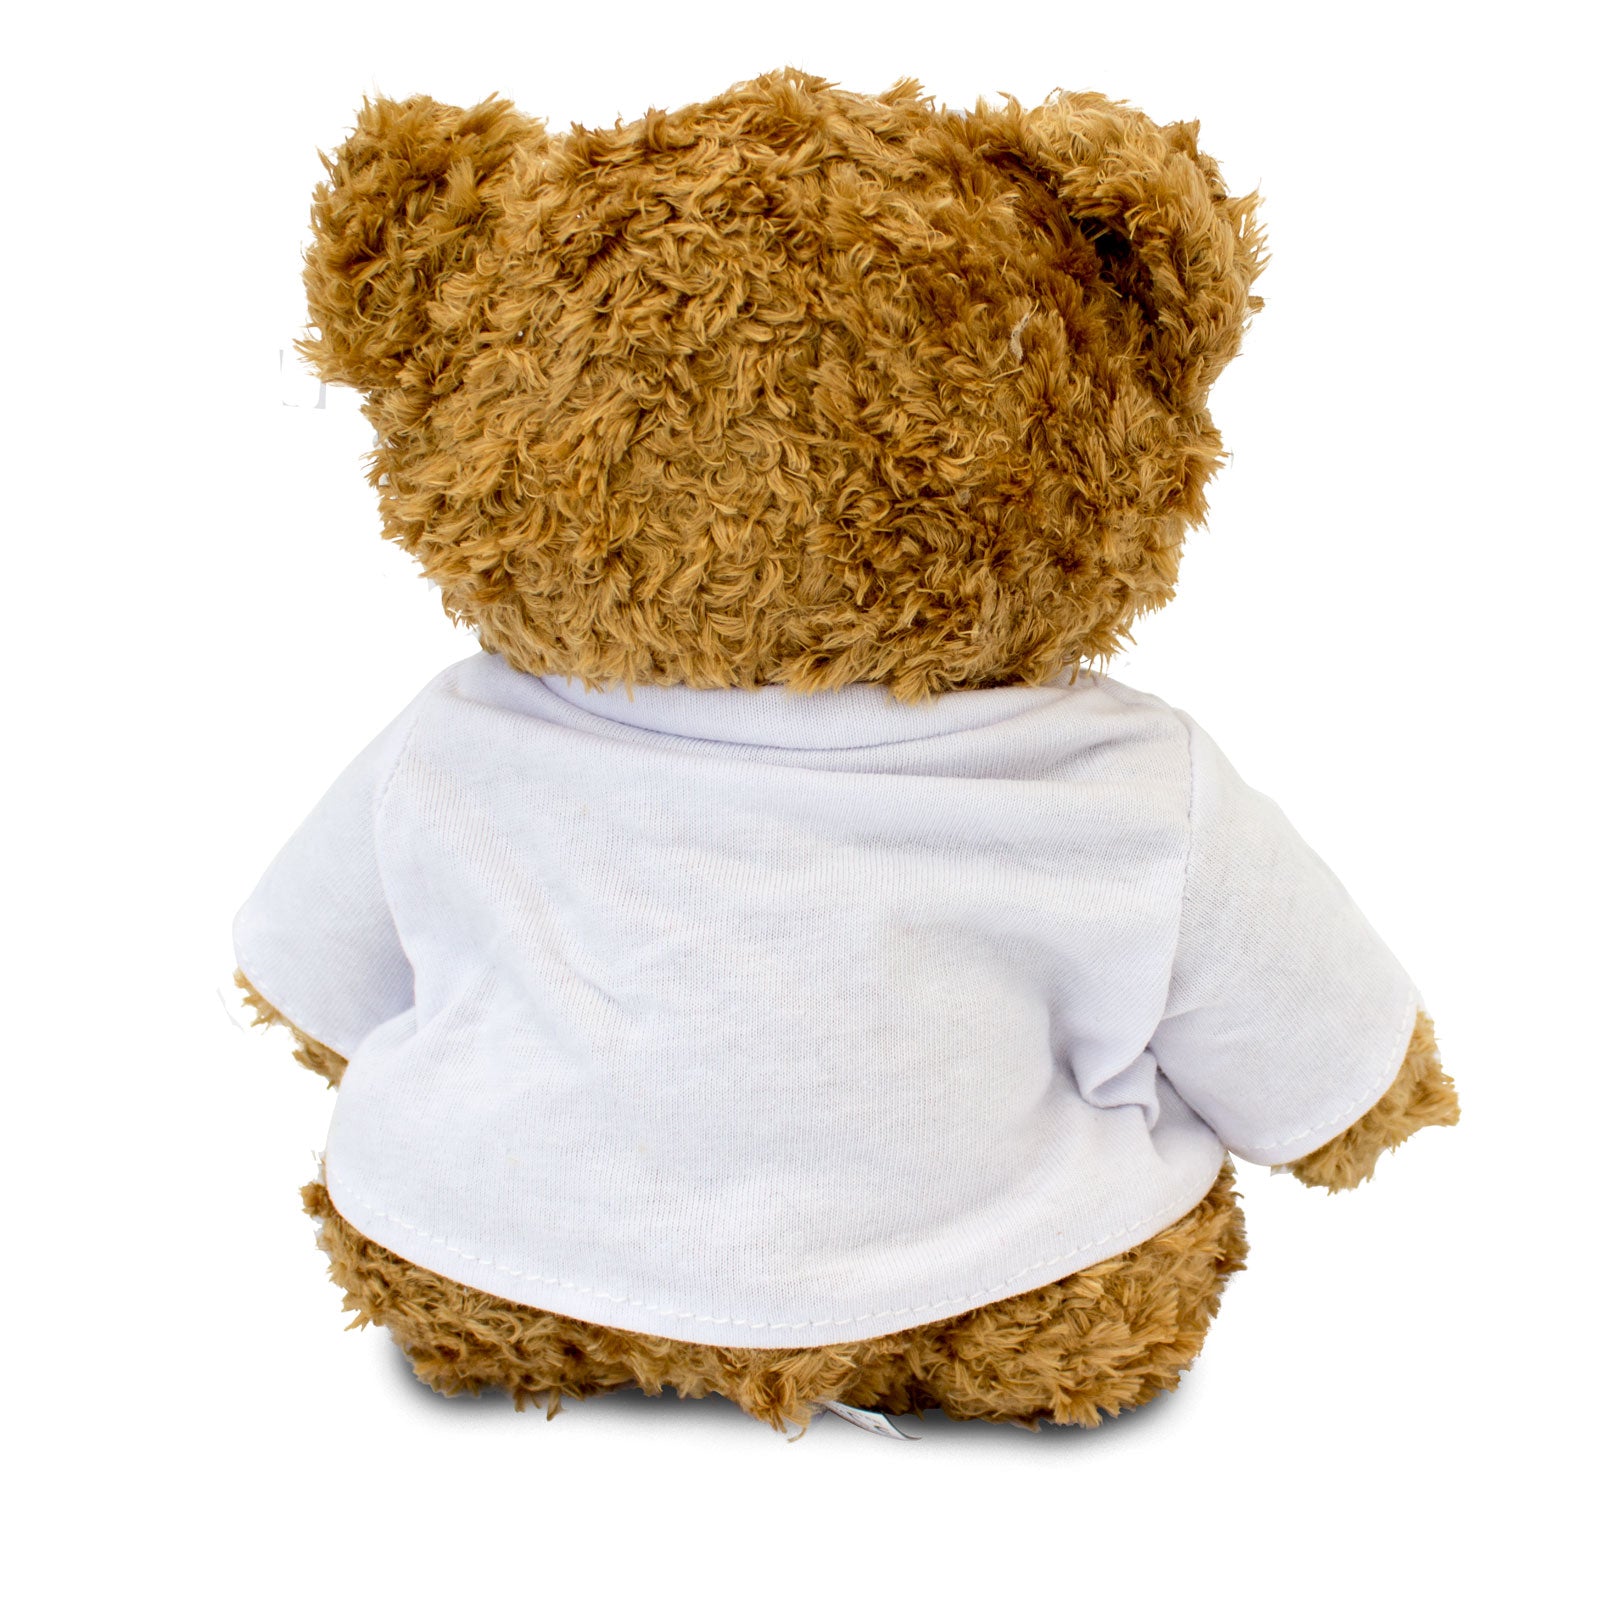 Get Well Soon Abina - Teddy Bear